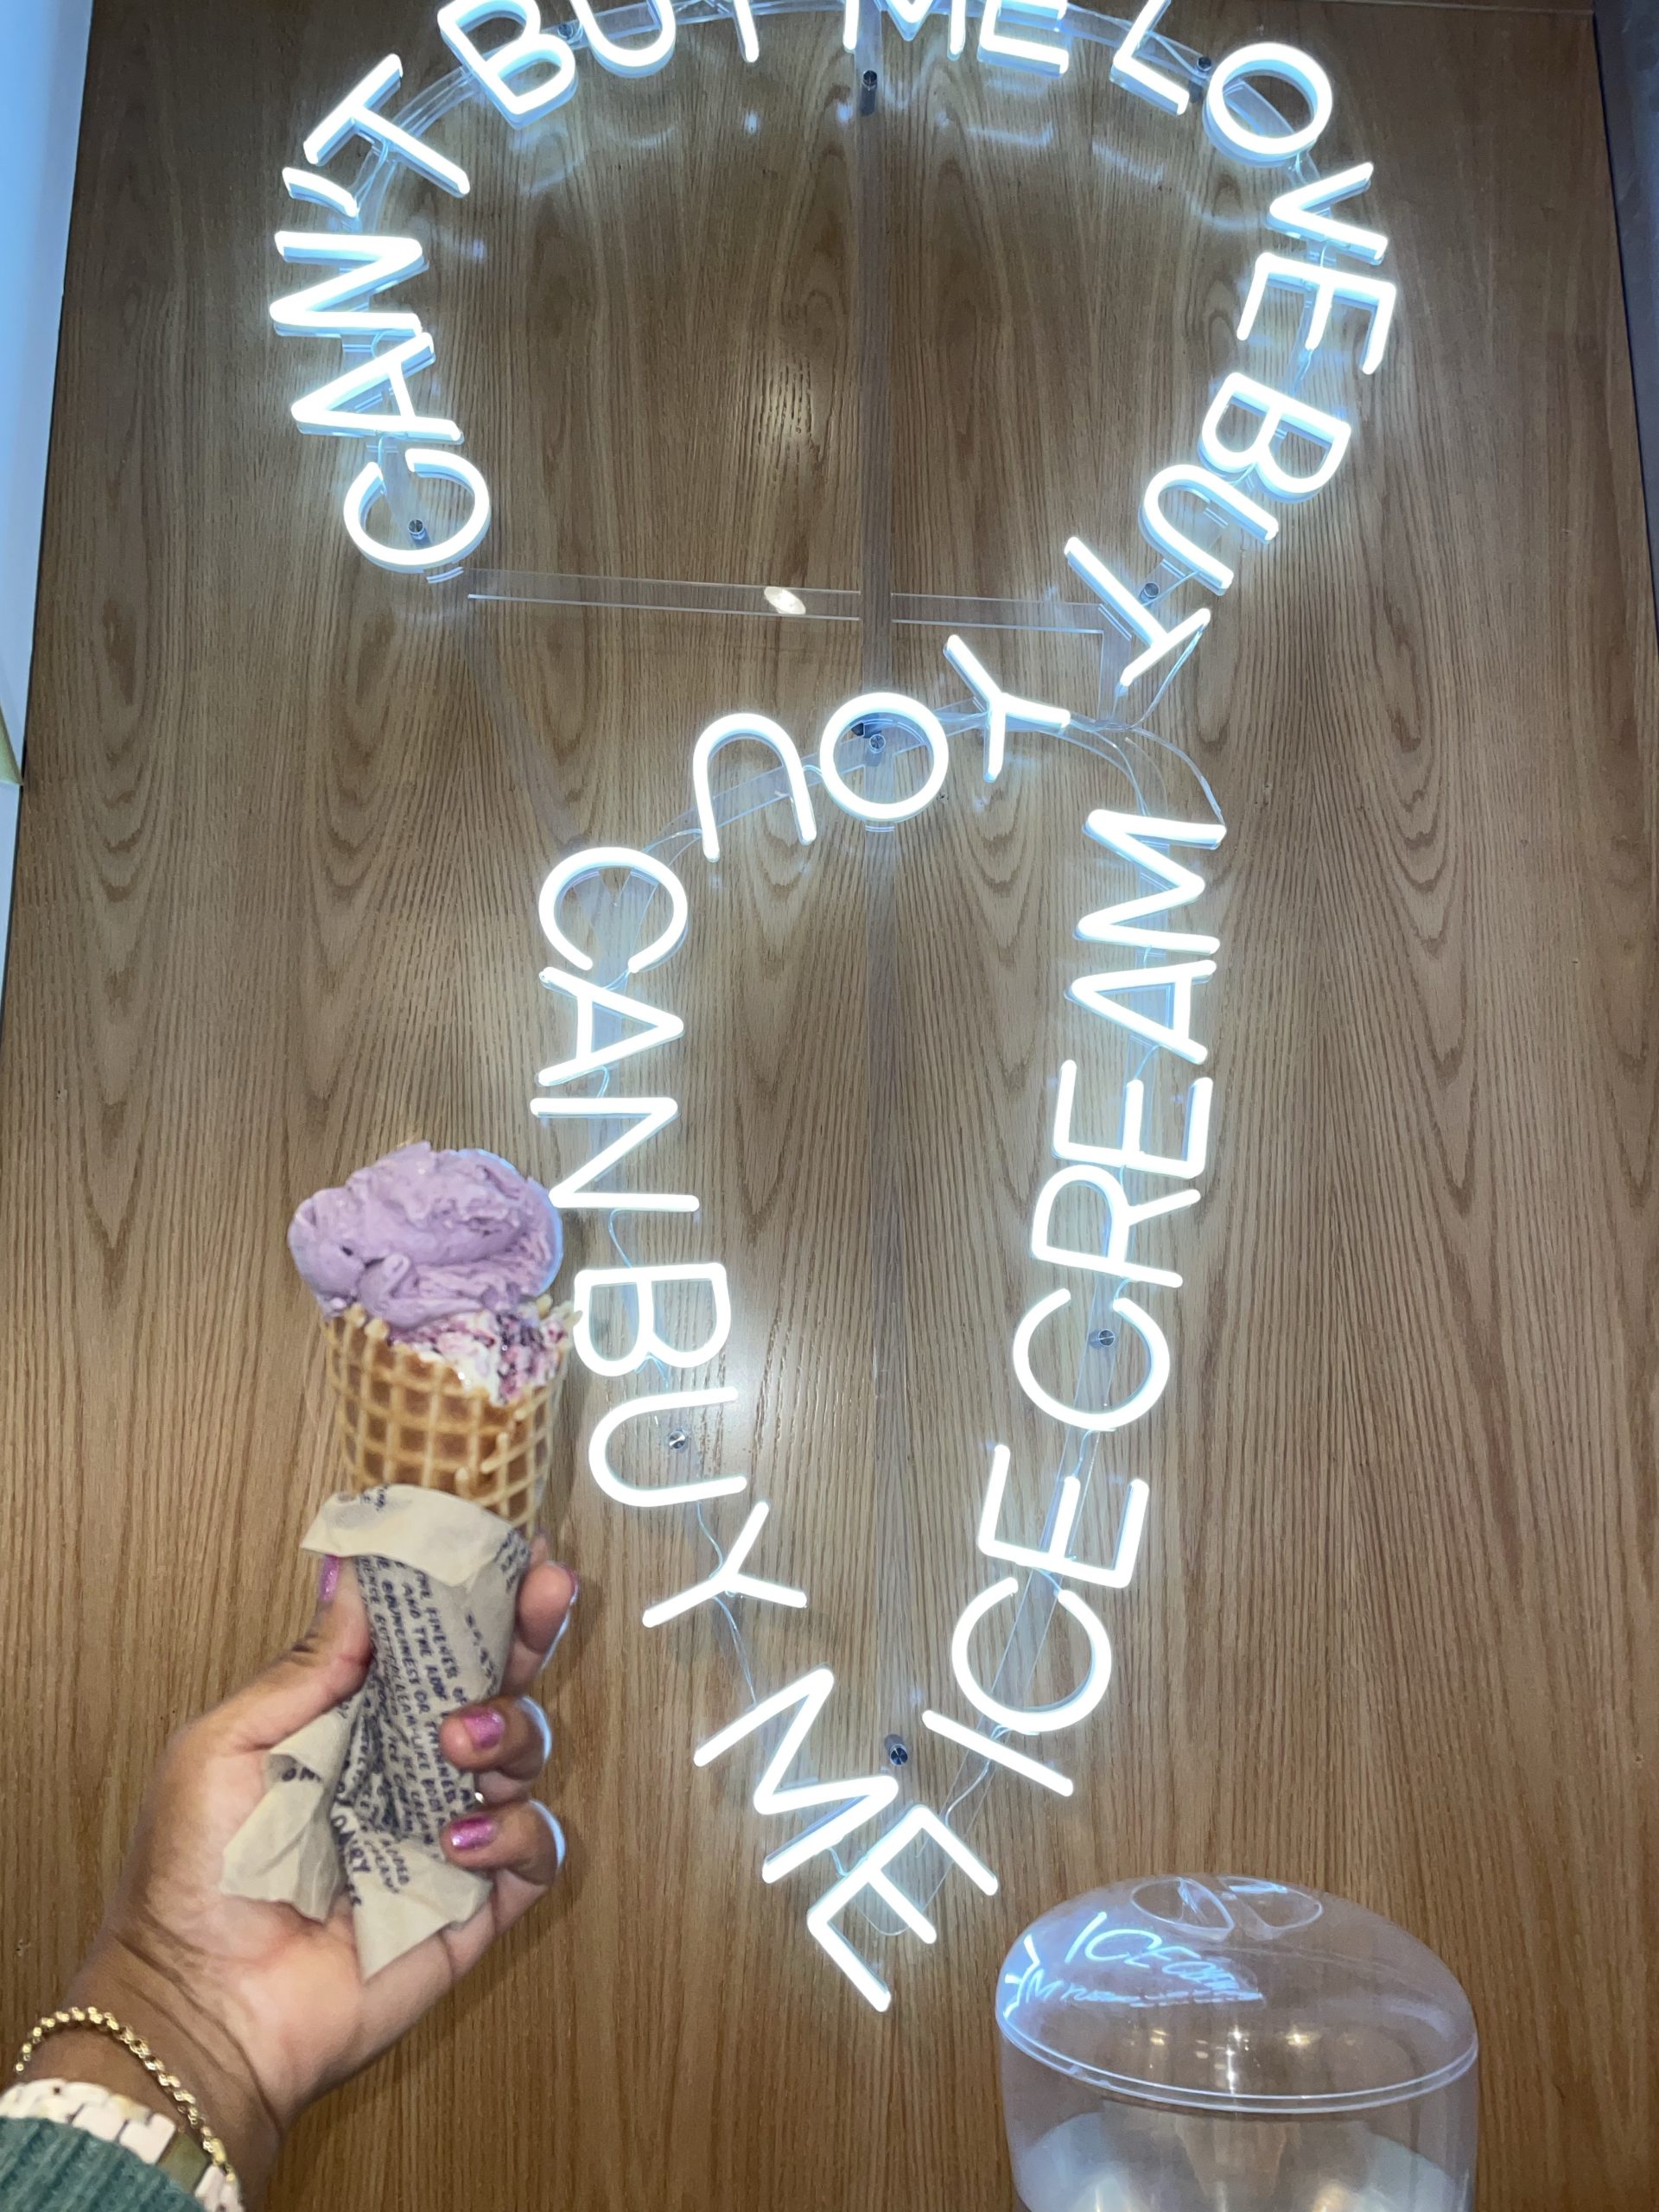 Ice cream + Thai = The Perfect Combination